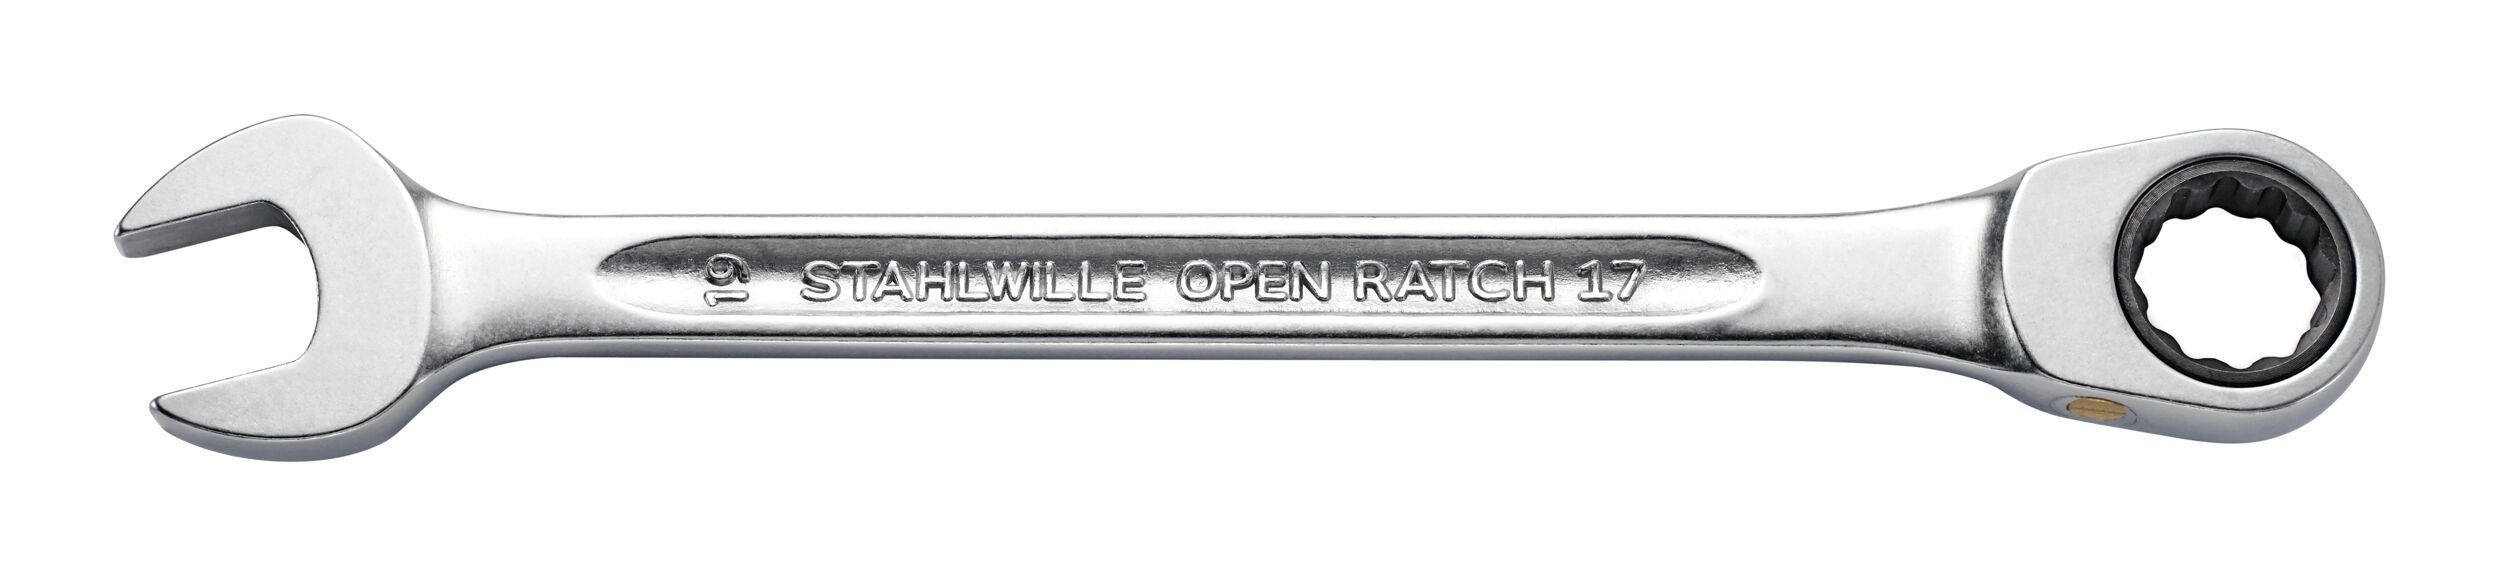 Stahlwille Ratschenringschlüssel, Maul-Ringratschen-Schlüssel gerade 21 mm